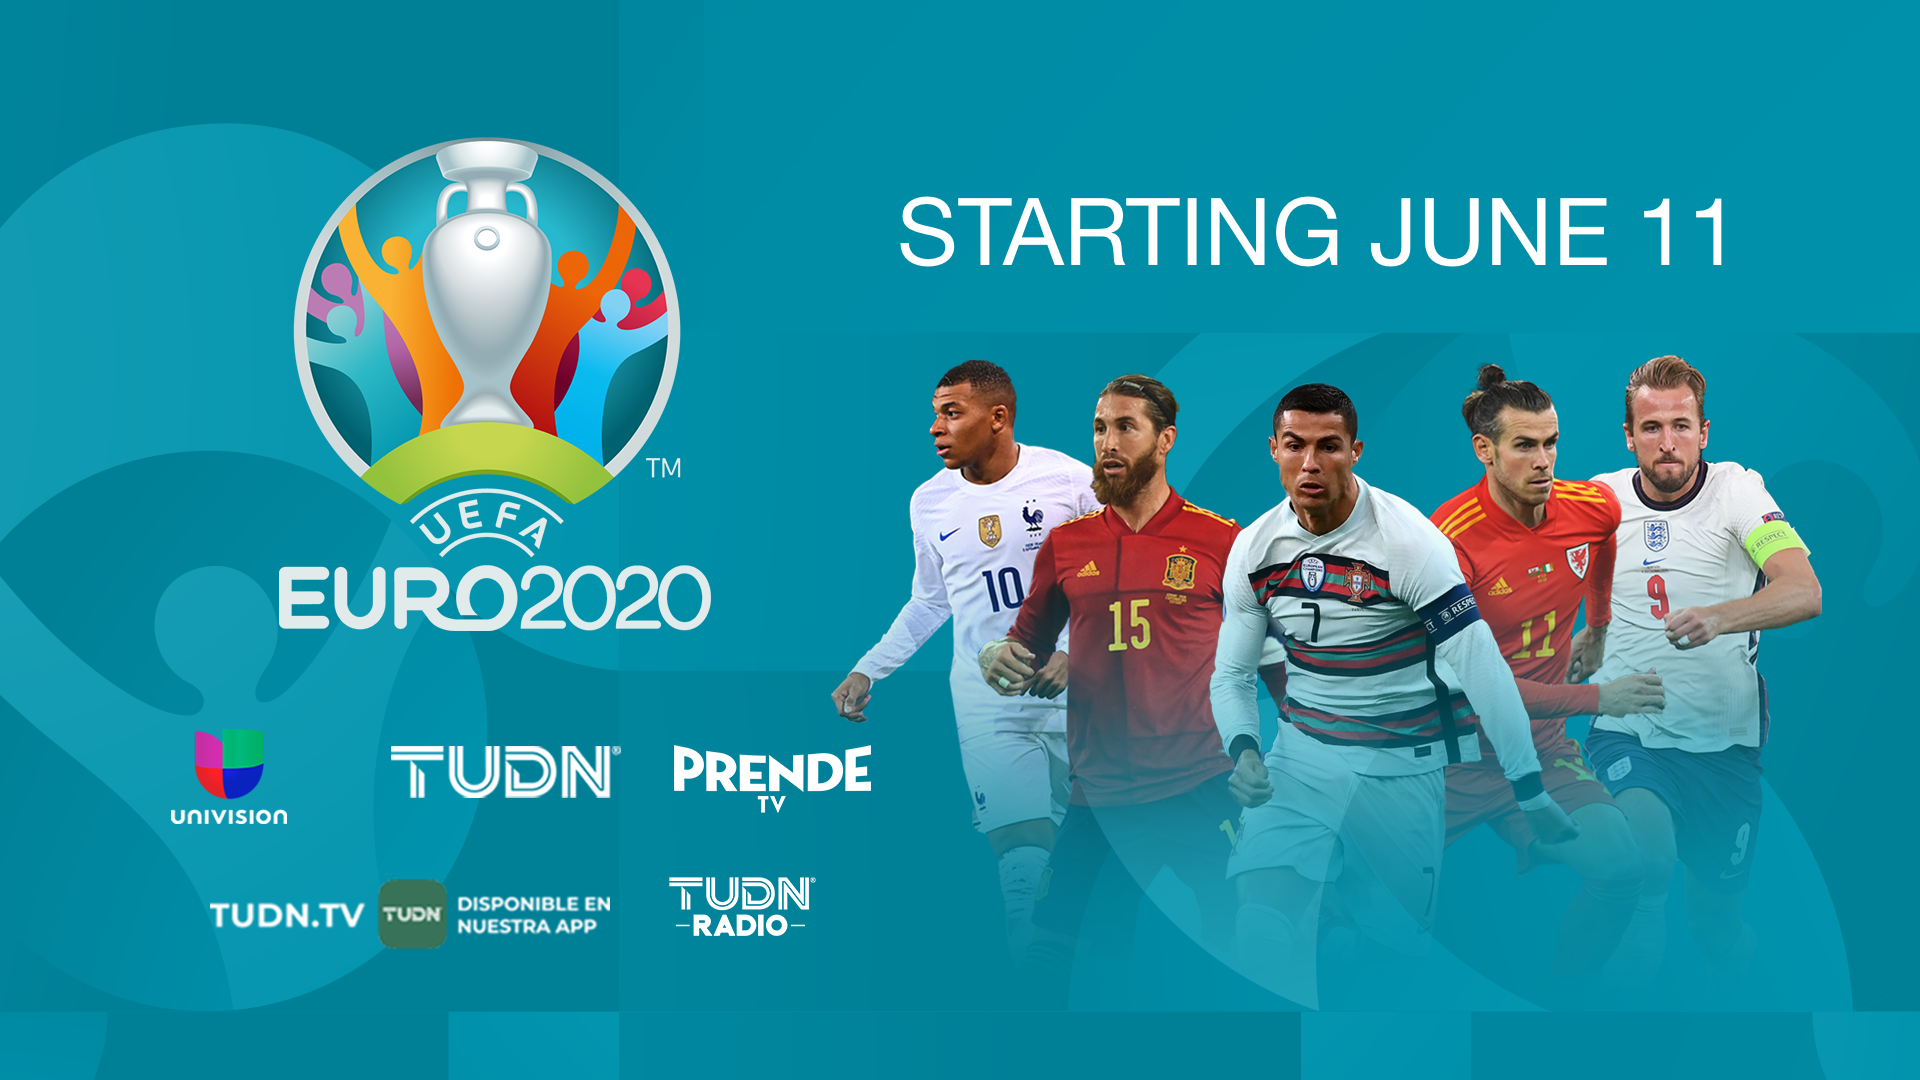 Univisions PrendeTV To Stream Live Euro 2020 Soccer Matches Next TV